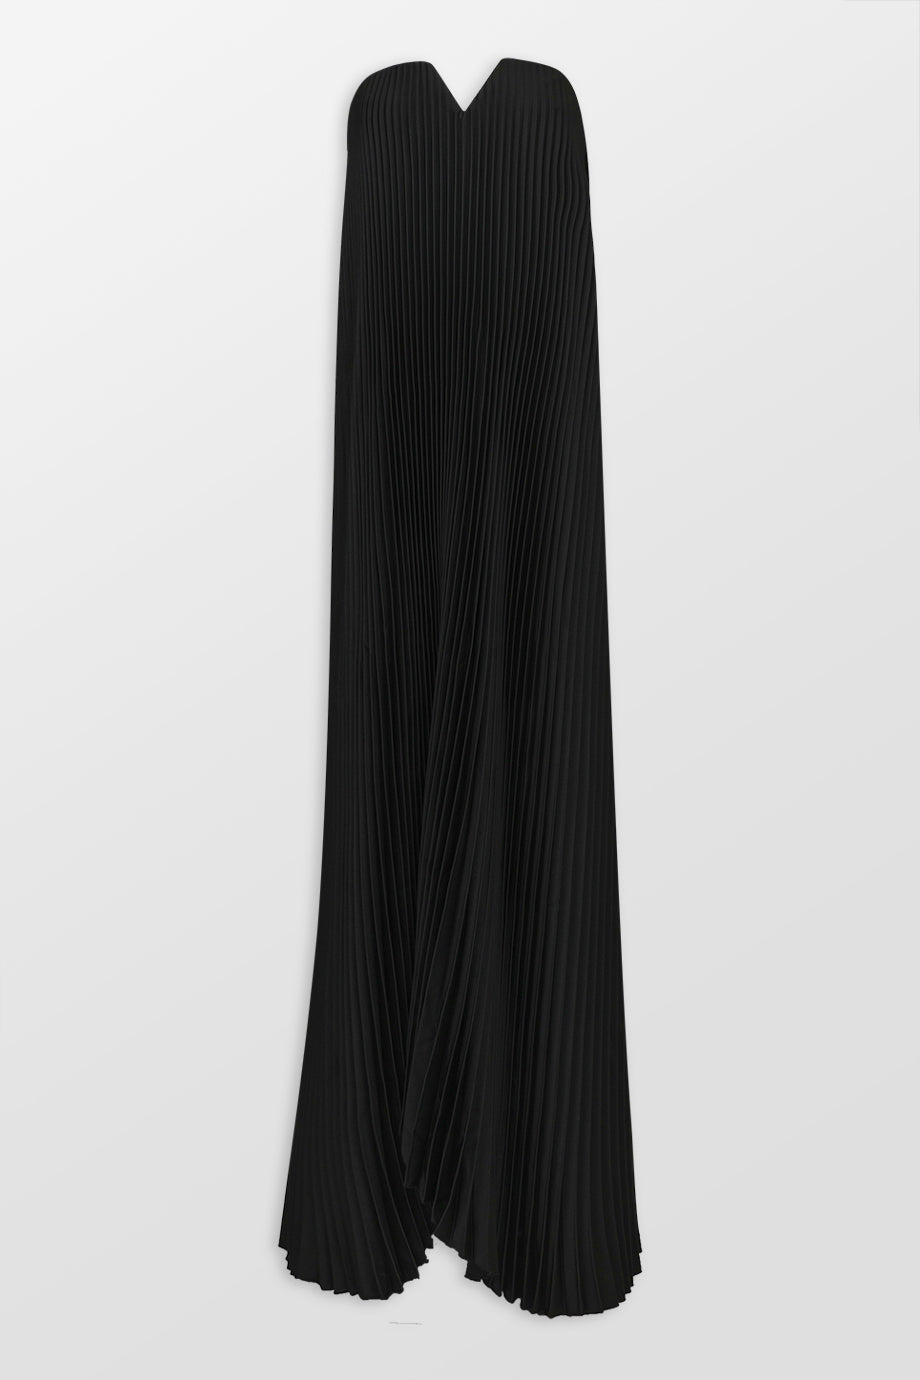 Black Tie Gown